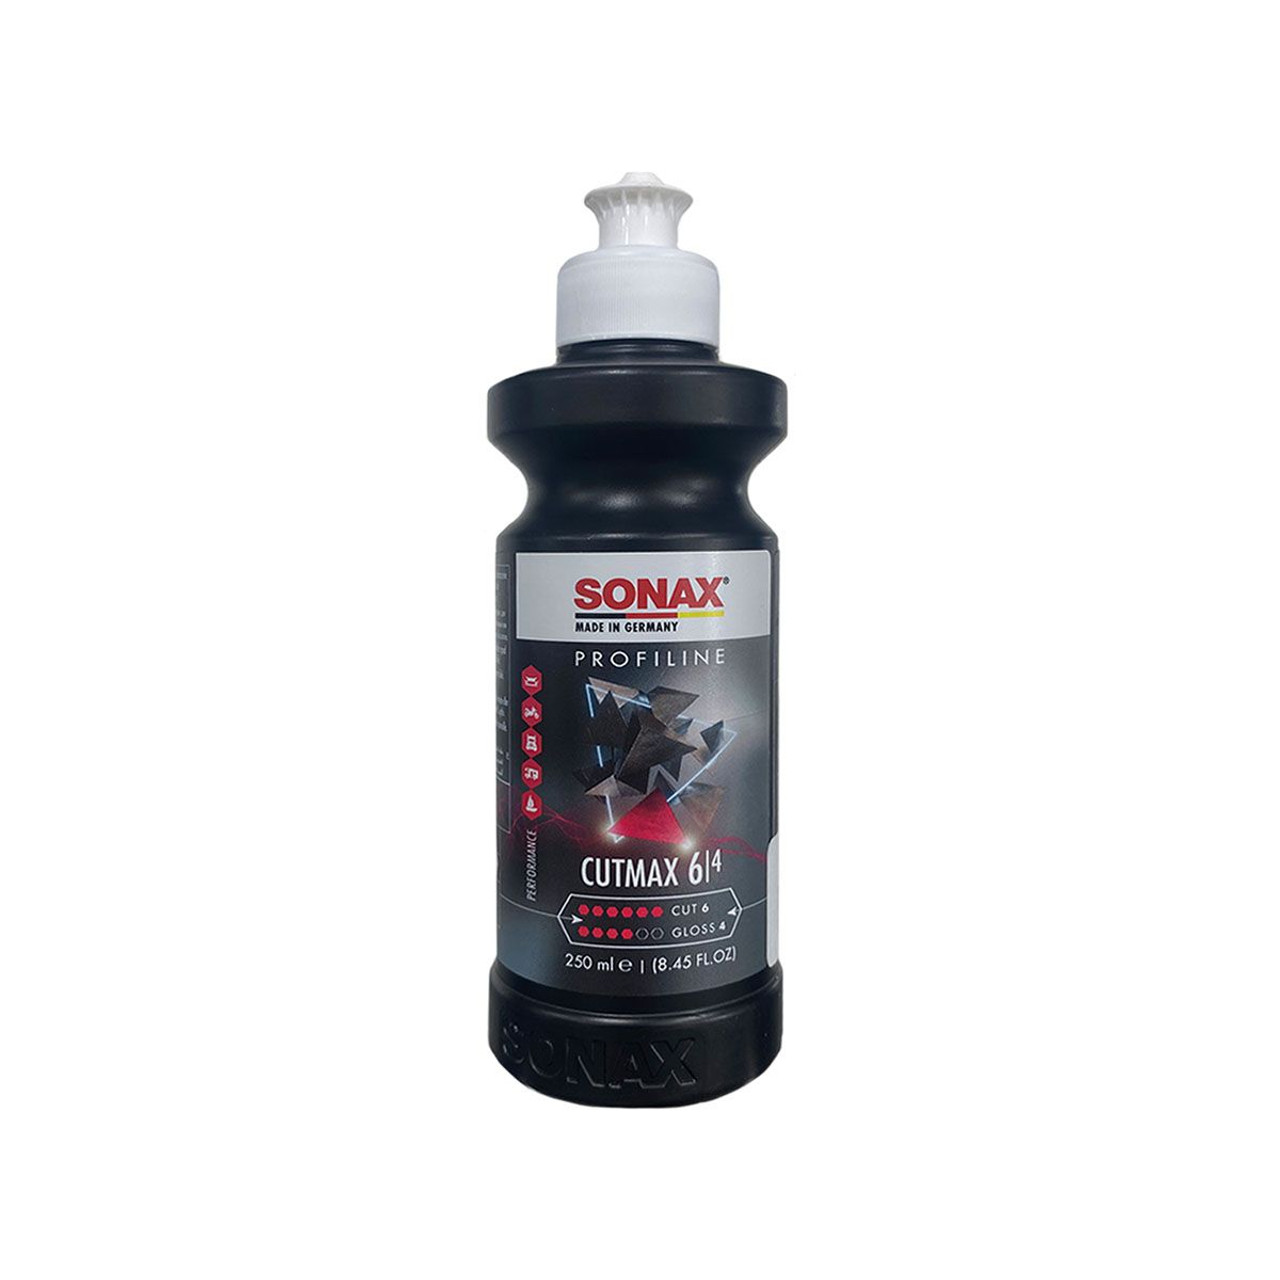 Sonax - Profiline CutMax